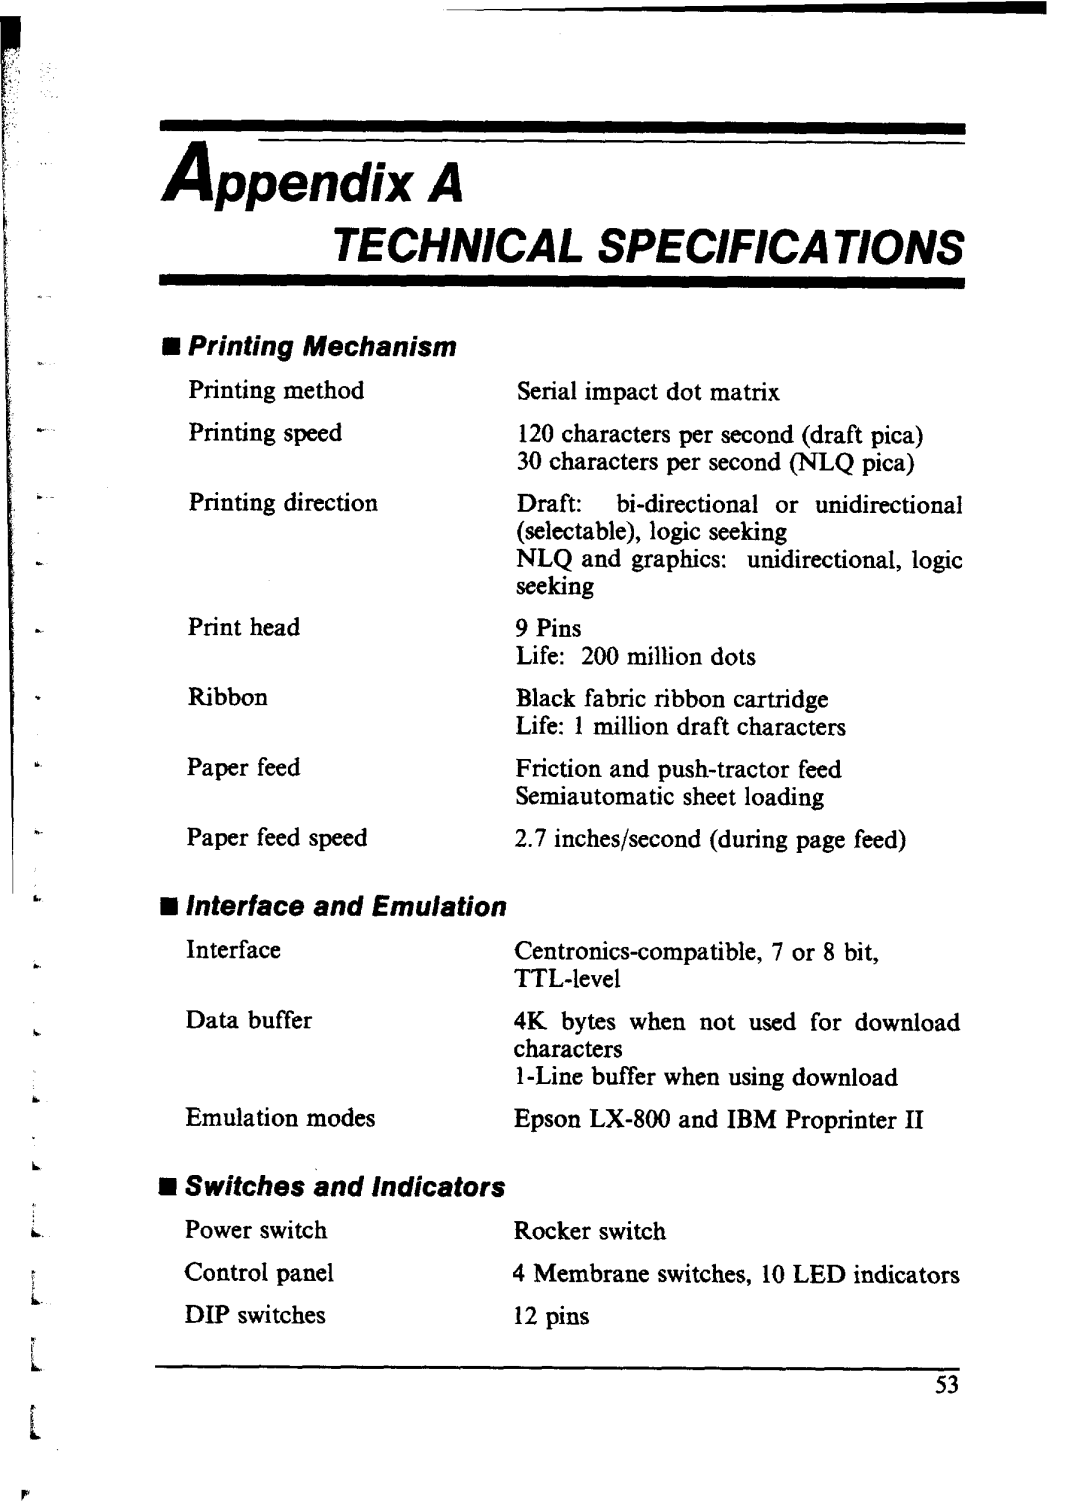 Star Micronics NX-1000 manual TECHNICAL SPEClF/CAl/O/VS, n Printing Mechanism, n Interface and Emulation 